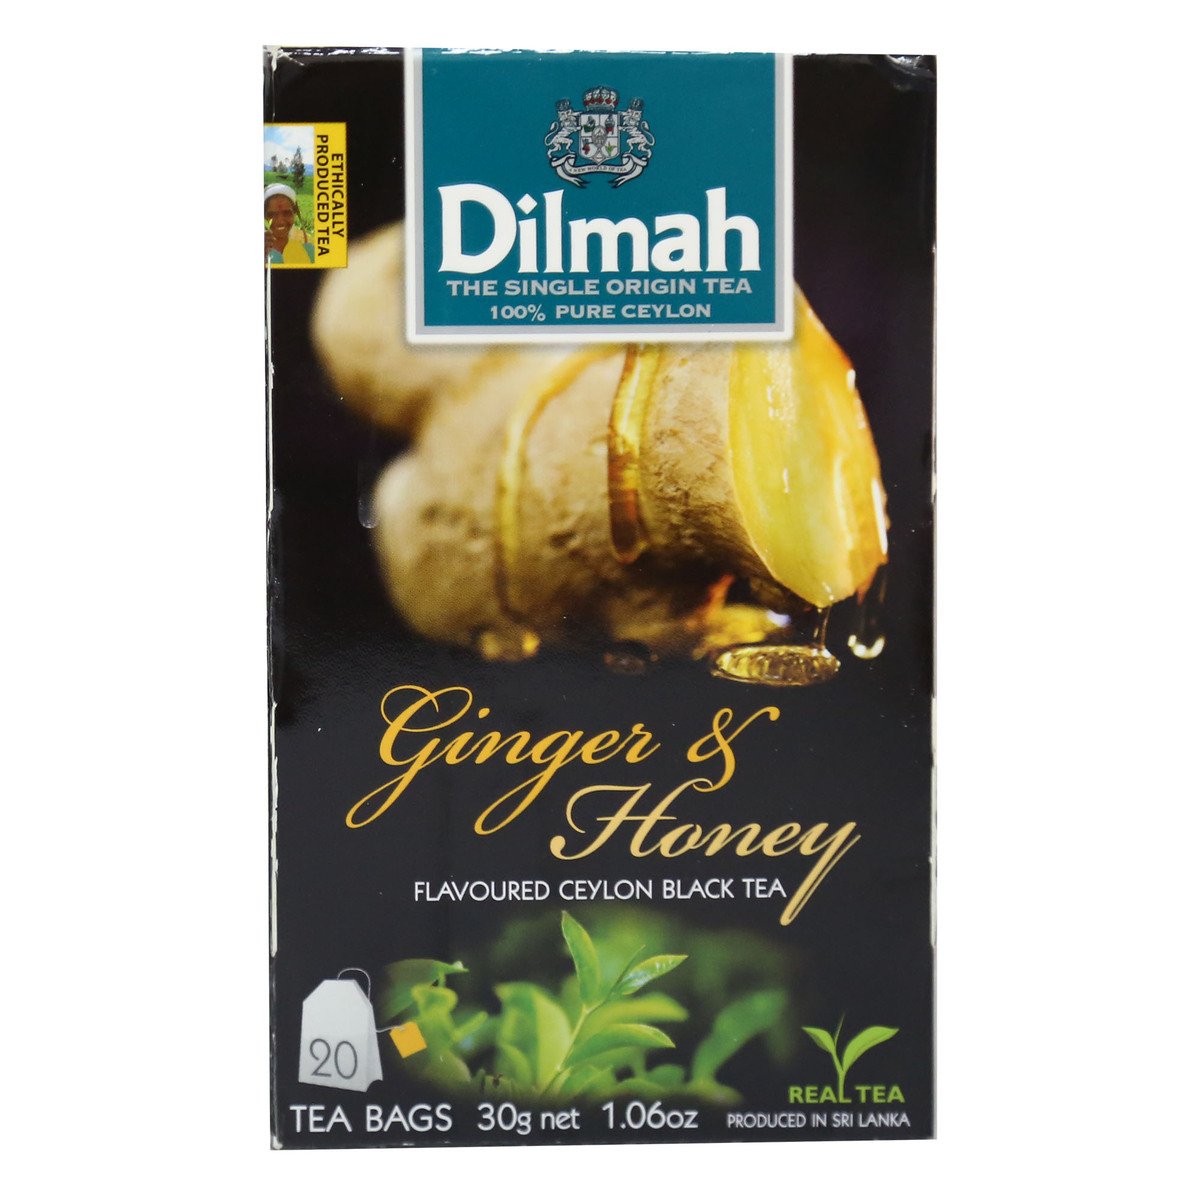 Dilmah Flavoured Ceylon Black Tea Ginger and Honey 20 Teabags